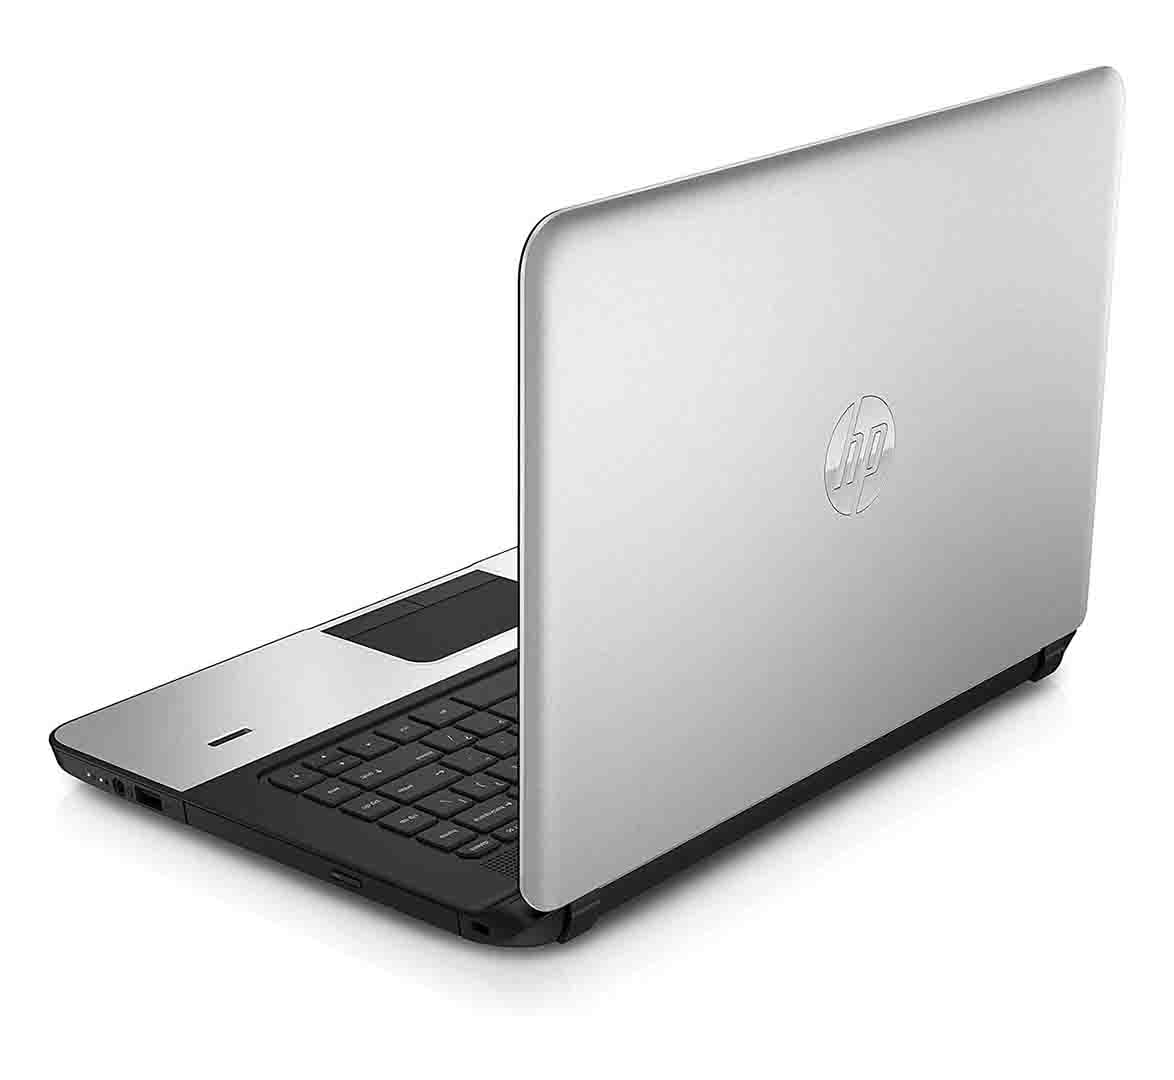 345 G2 Notebook PC